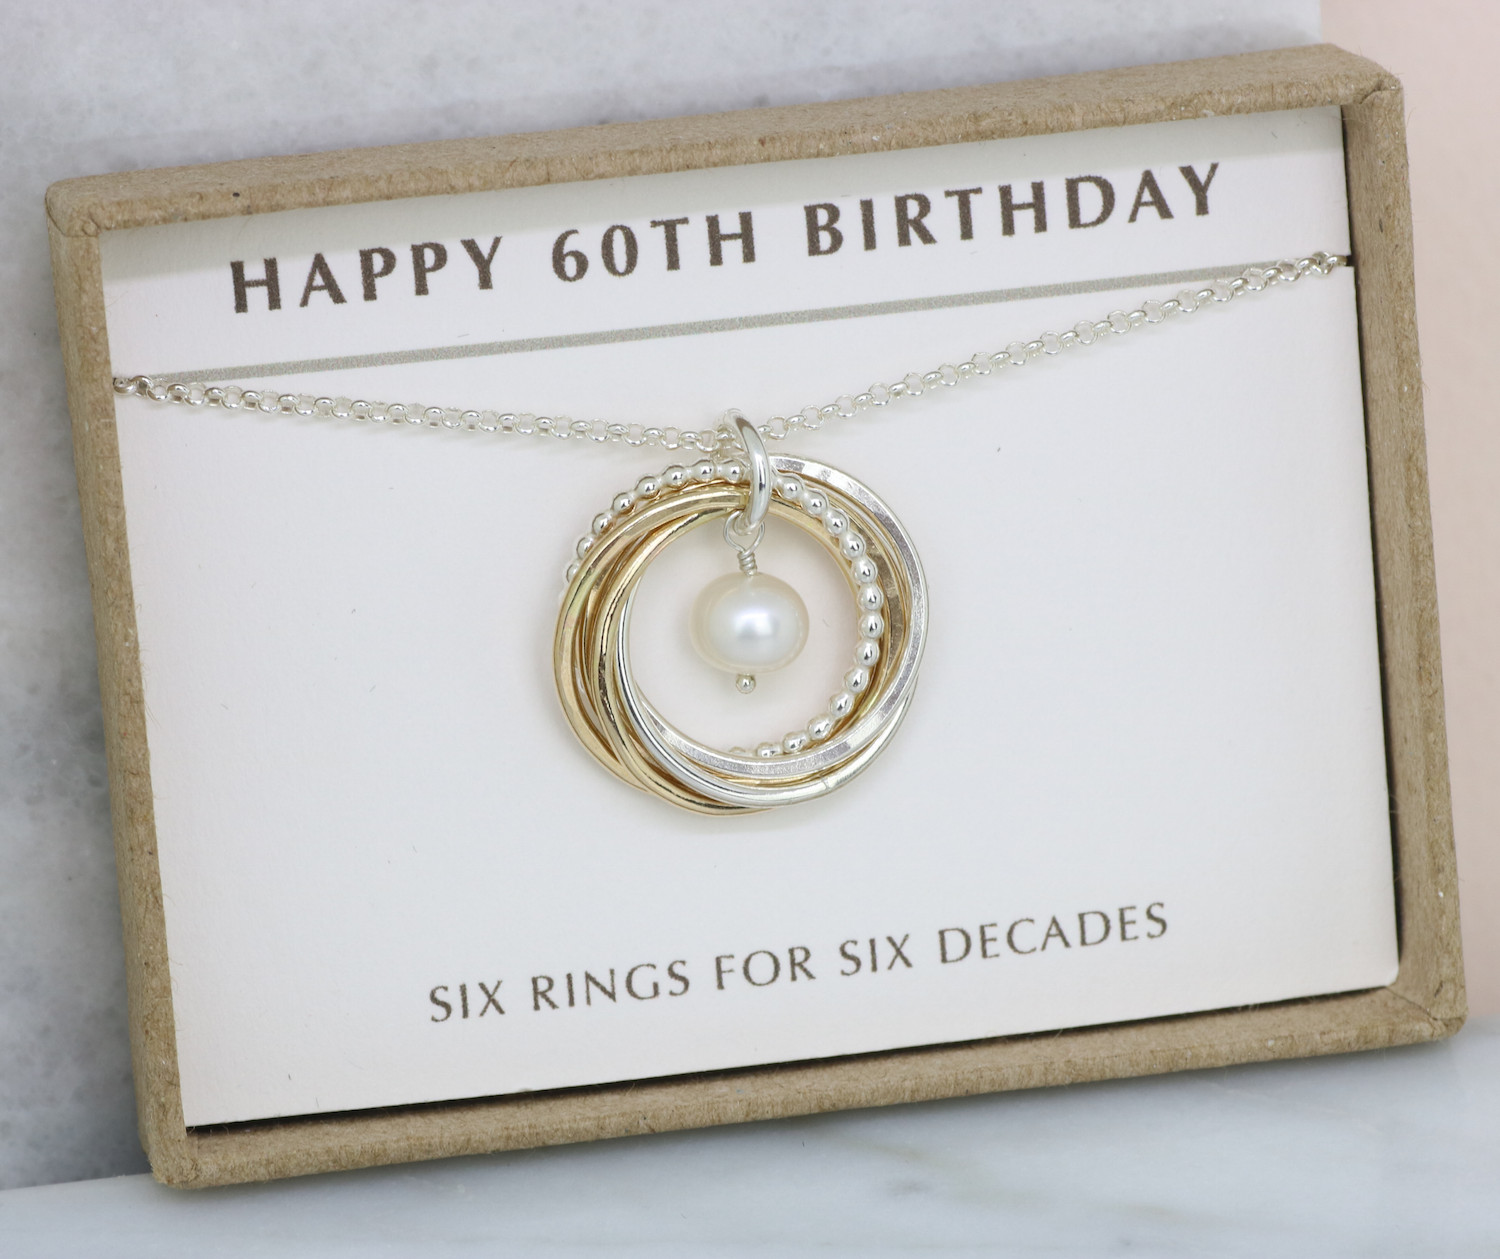 Gift Ideas For 60th Birthday
 60th birthday t idea June birthstone Gifts